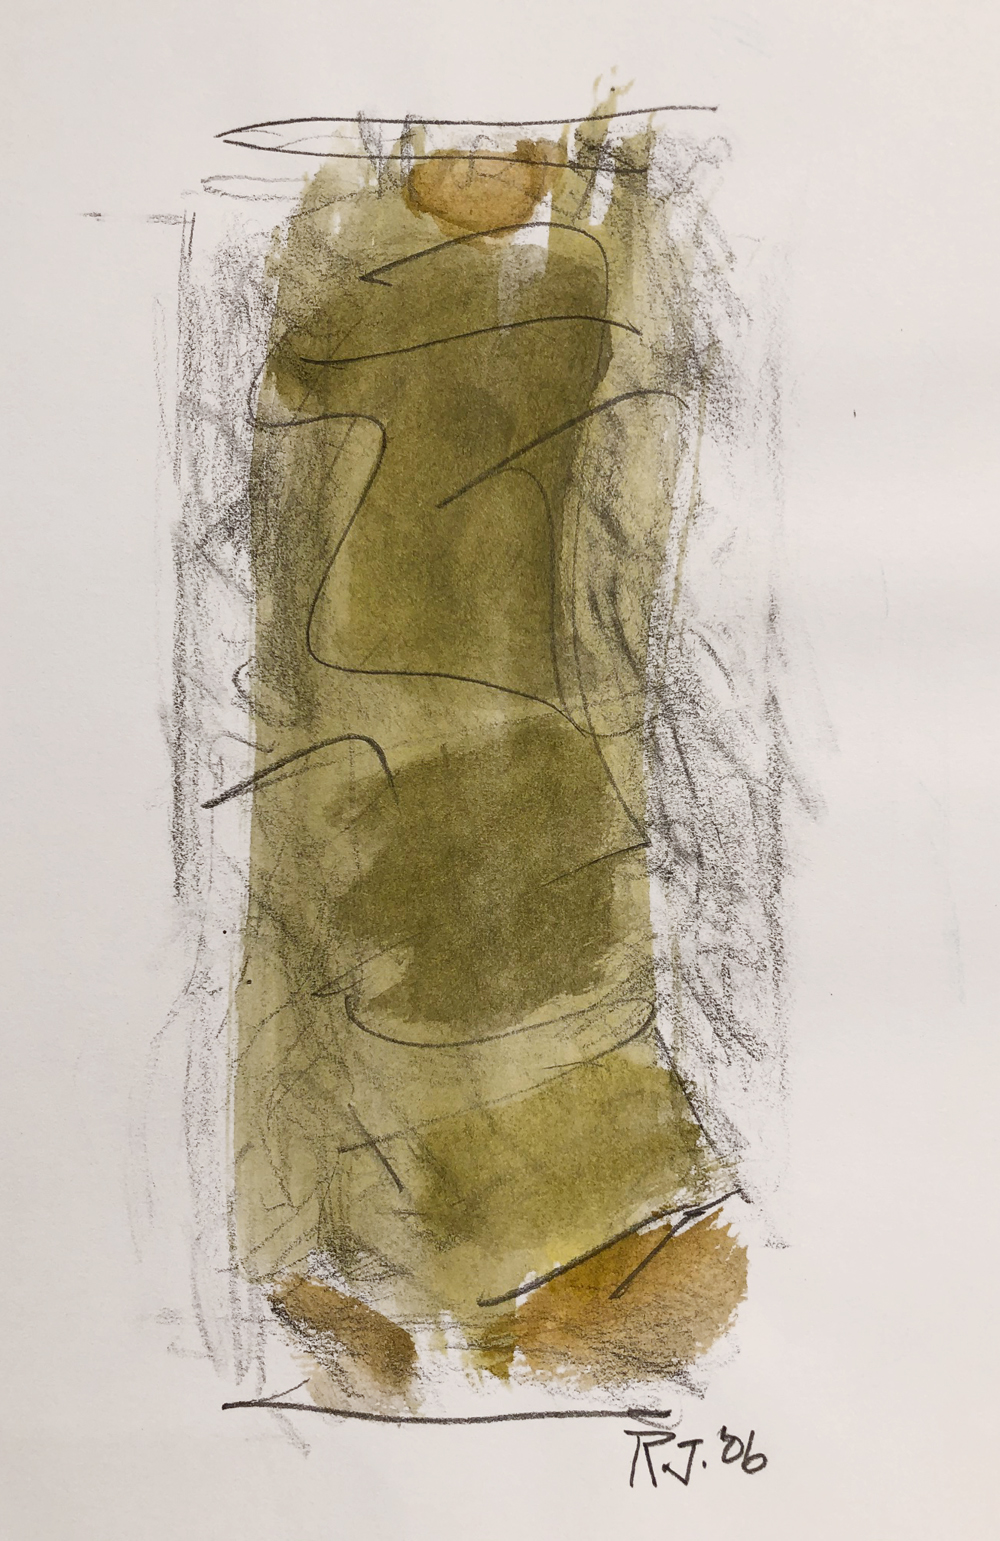 Robert C. Jones, Untitled, 2006, graphite and watercolor on paper, $1000.